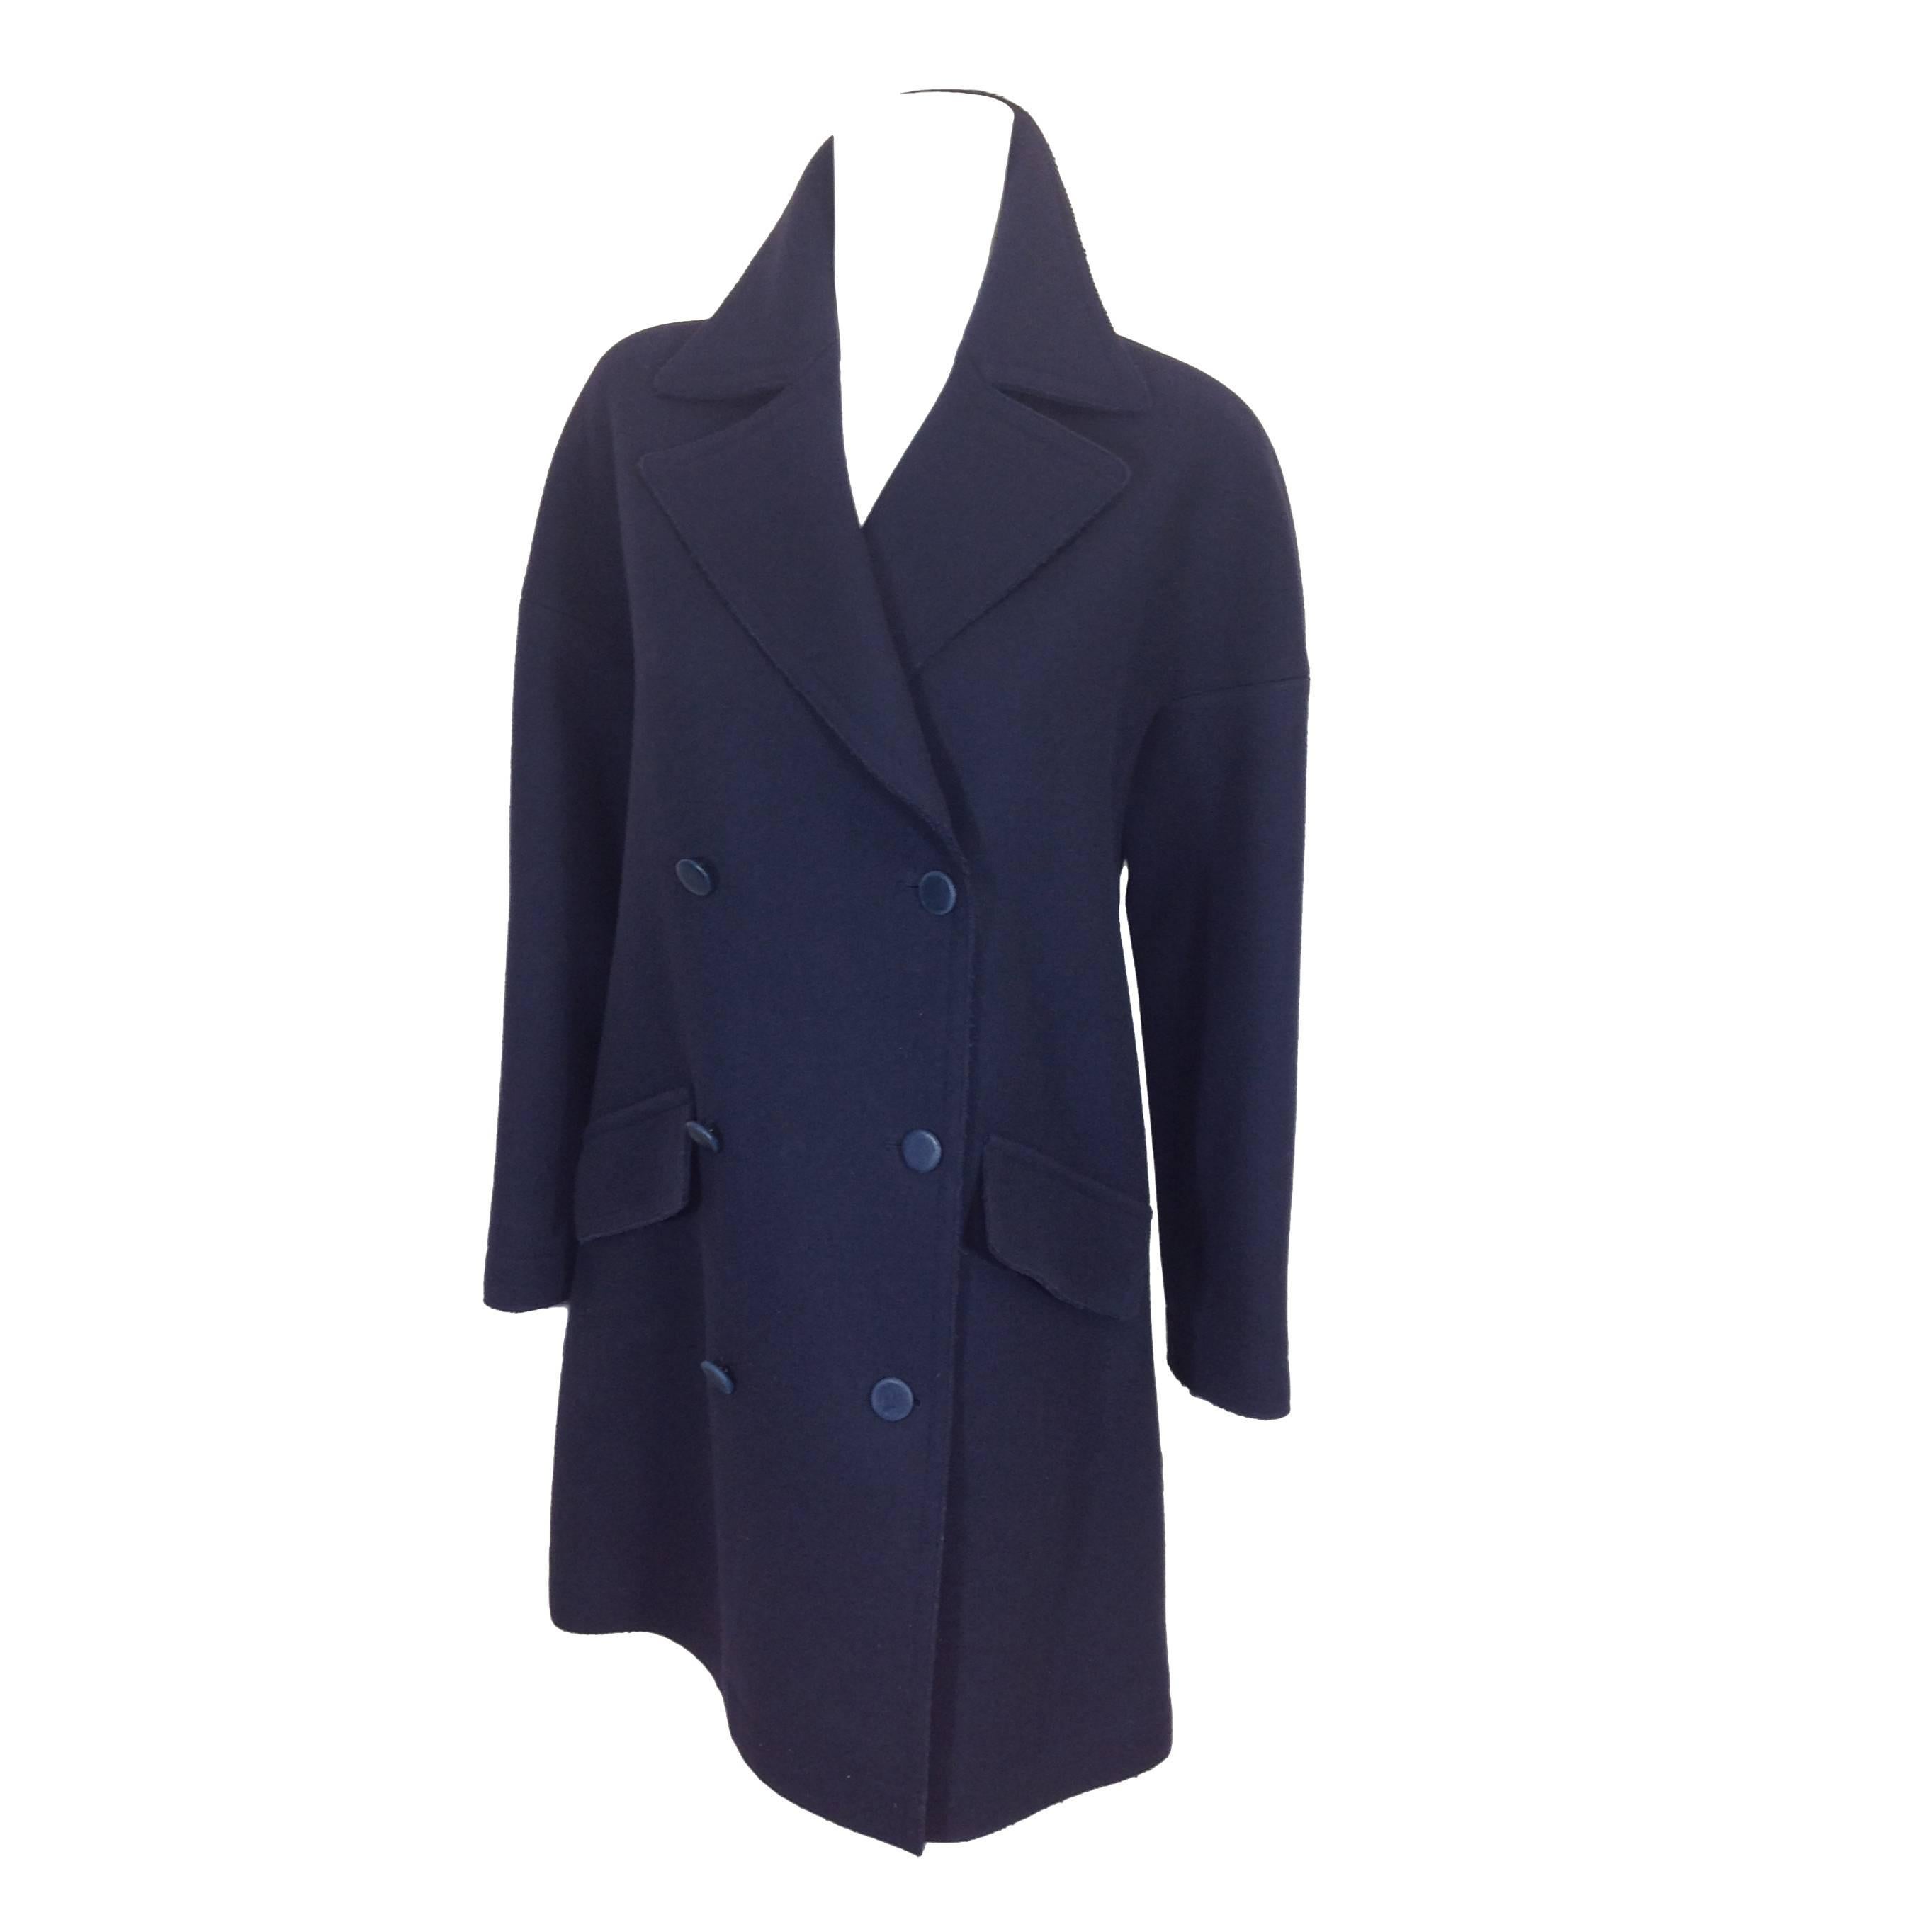 Alaia navy wool pea coat             Size 38